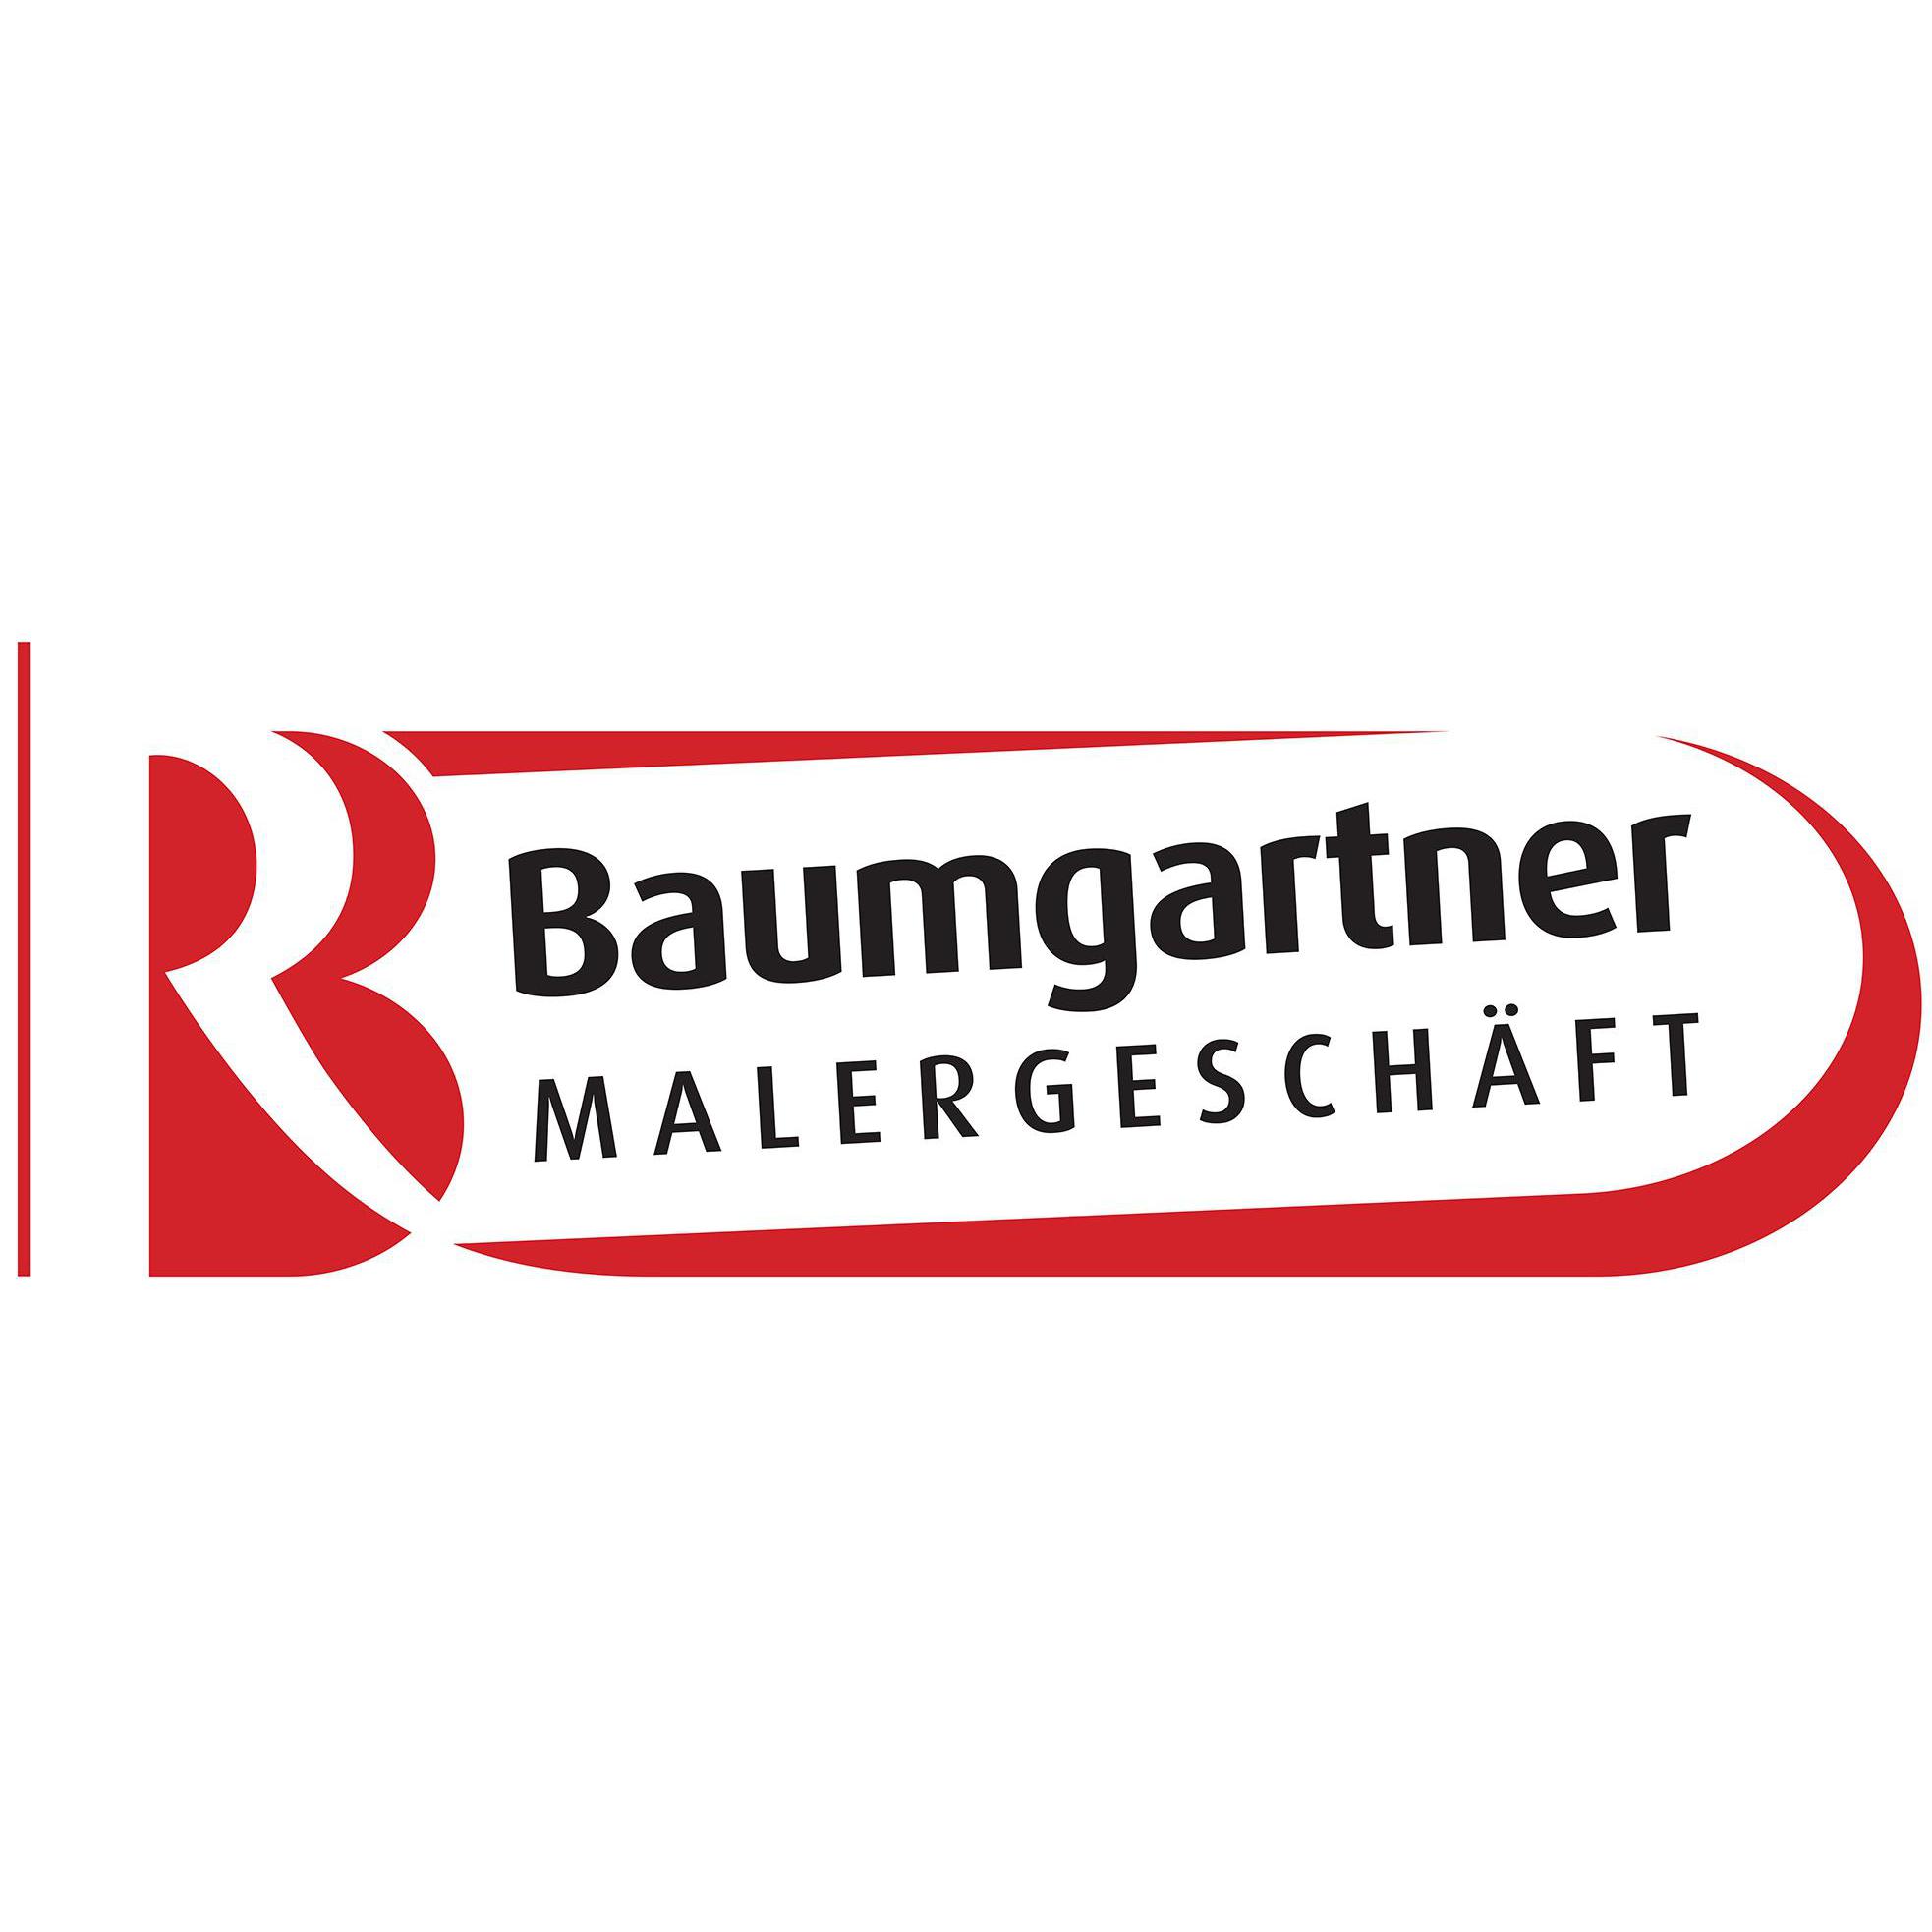 Baumgartner Malergeschäft Logo